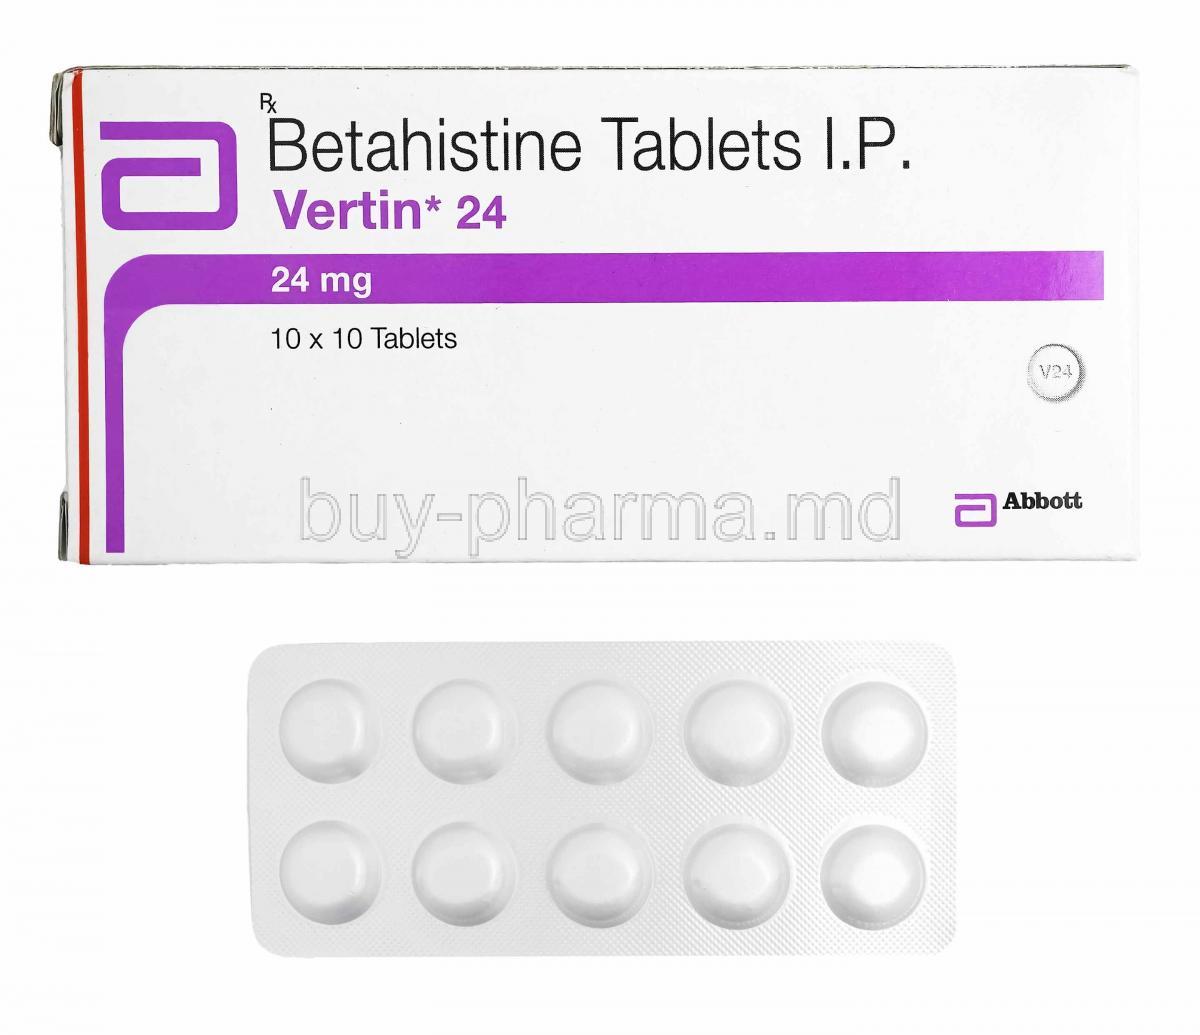 Vertin, Betahistine 24mg box and tablets